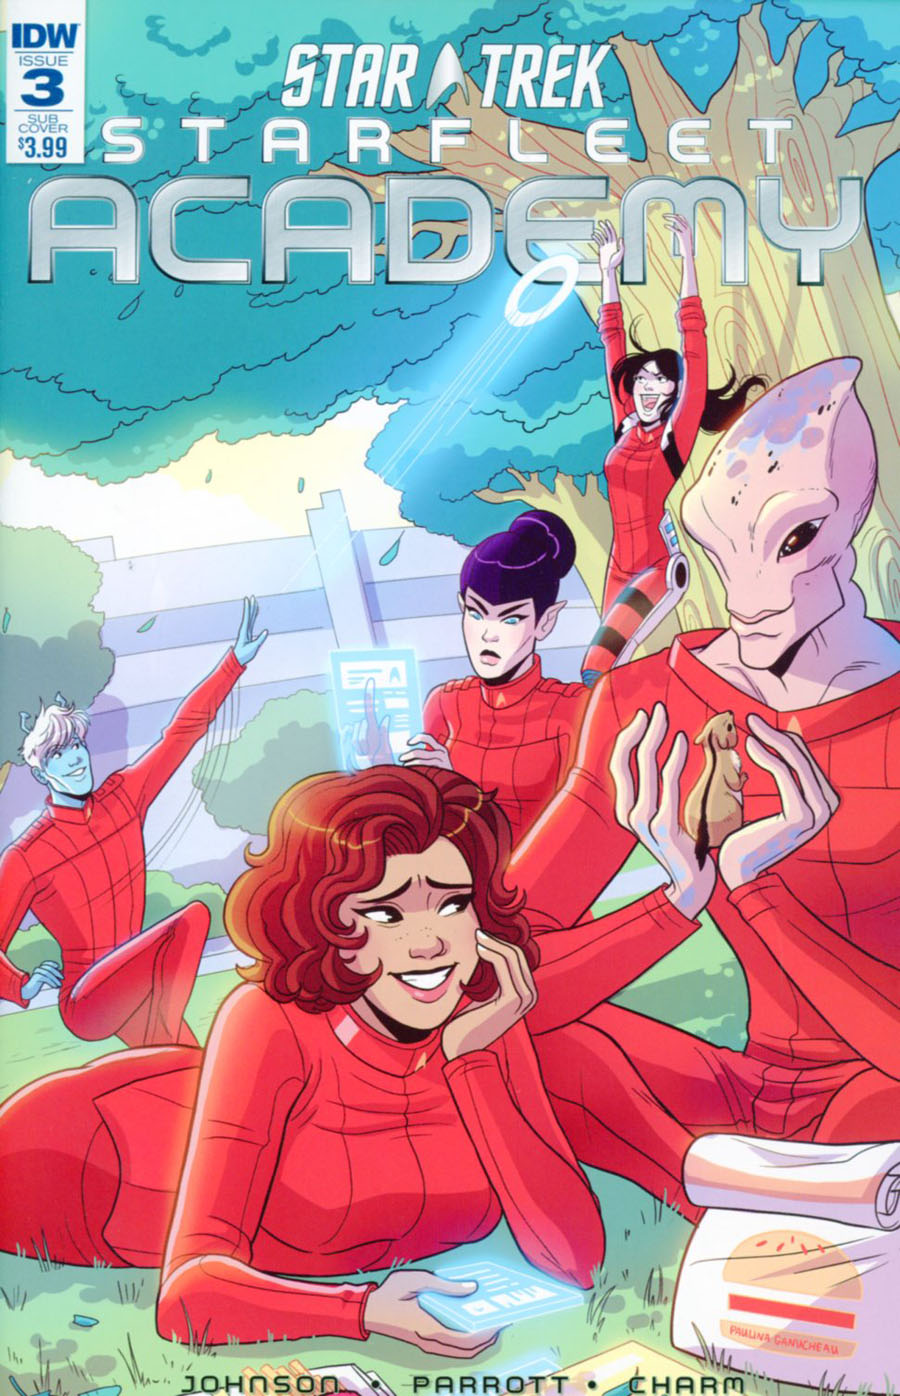 Star Trek Starfleet Academy (IDW) #3 Cover B Variant Paulina Ganucheau Subscription Cover